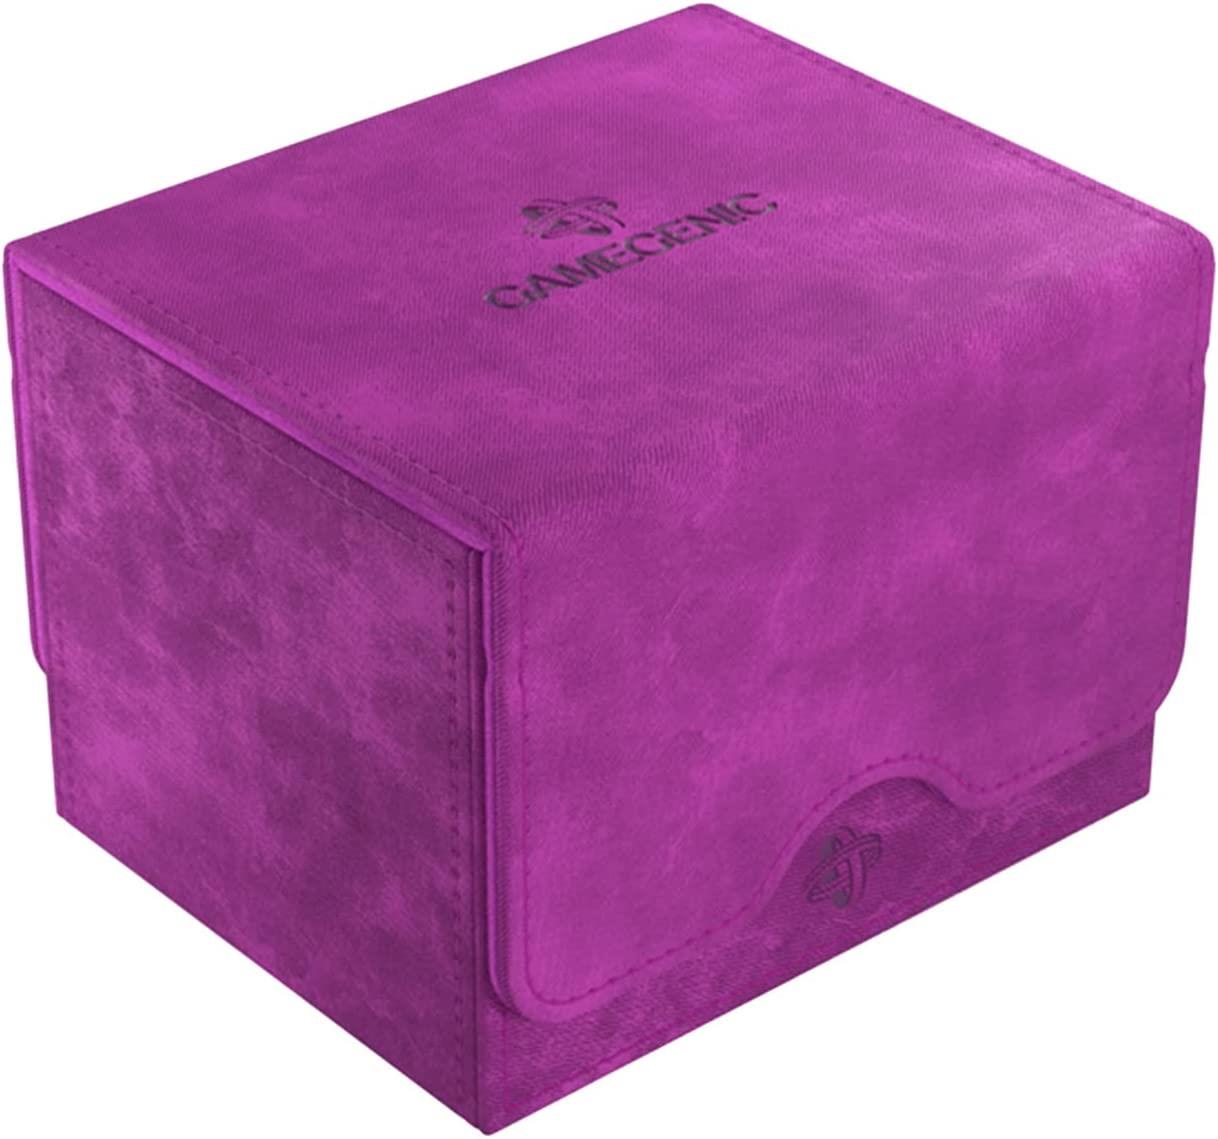 Sidekick 100+ XL - Purple   TCG Gamegenic